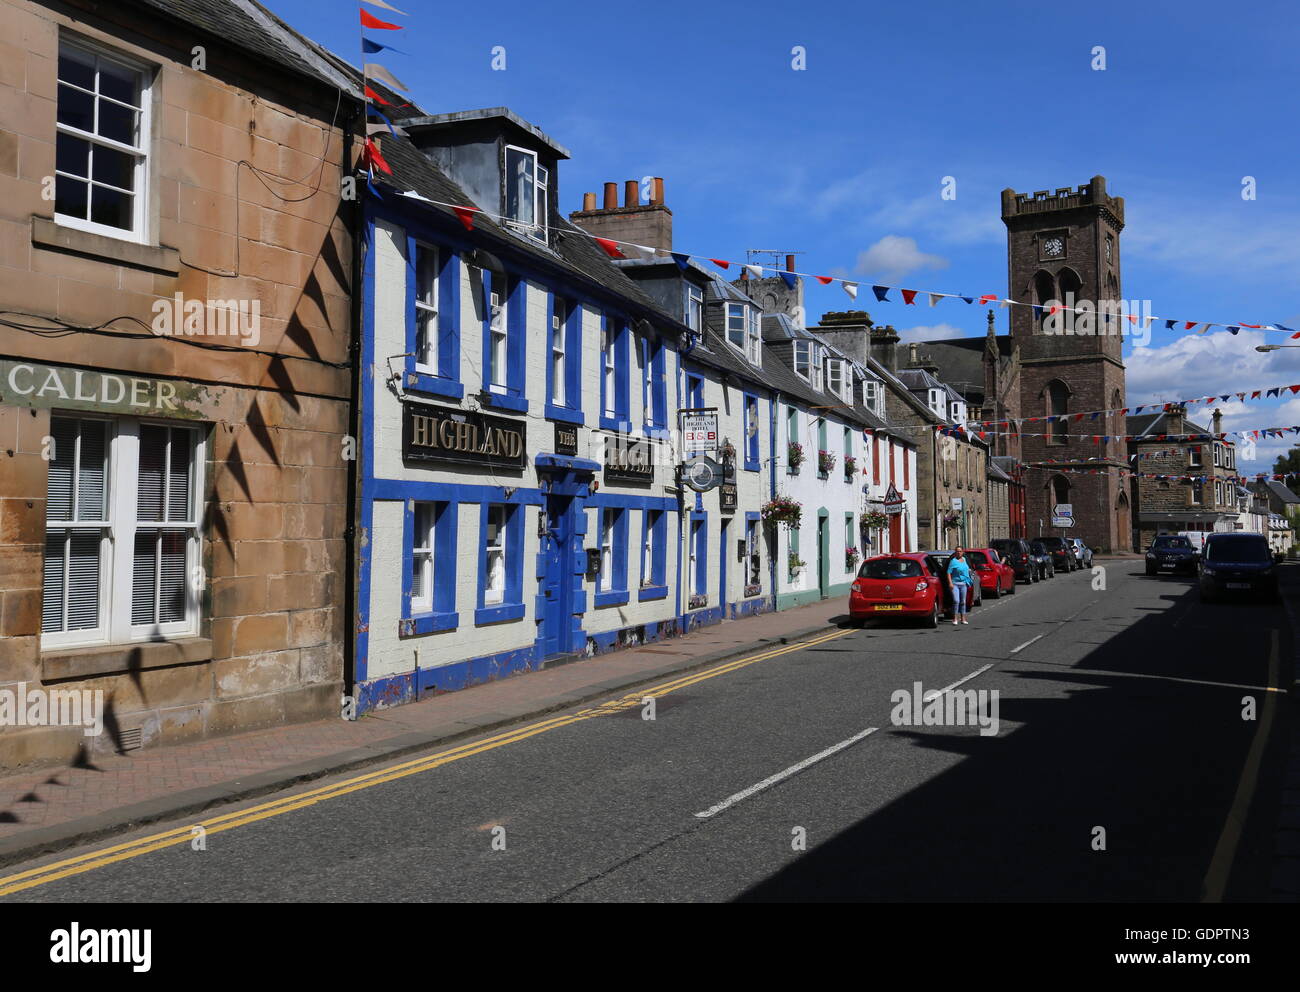 Doune street Szene mit Highland Hotel Schottland Juli 2016 Stockfoto